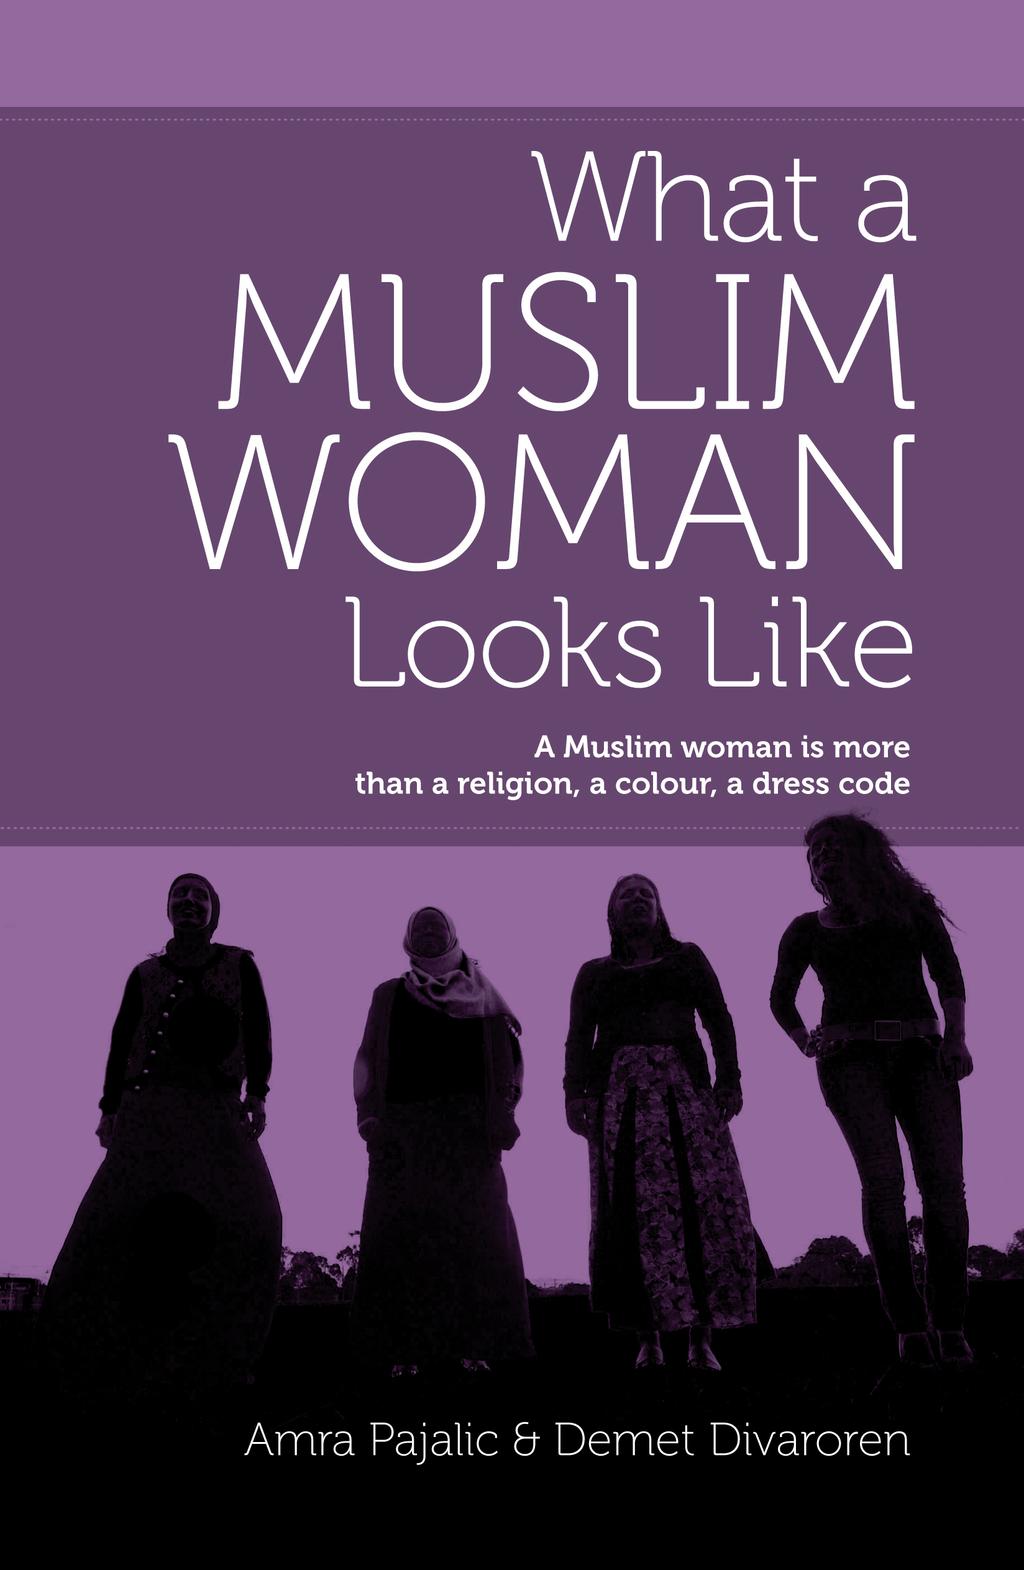 What a Muslim Woman Looks Like Teachers Resource Kit What a Muslim Woman Looks Like Amra Pajalic & Demet Divaroren ISBN9780646550398 Free distribution + $1 handling fee and postage.